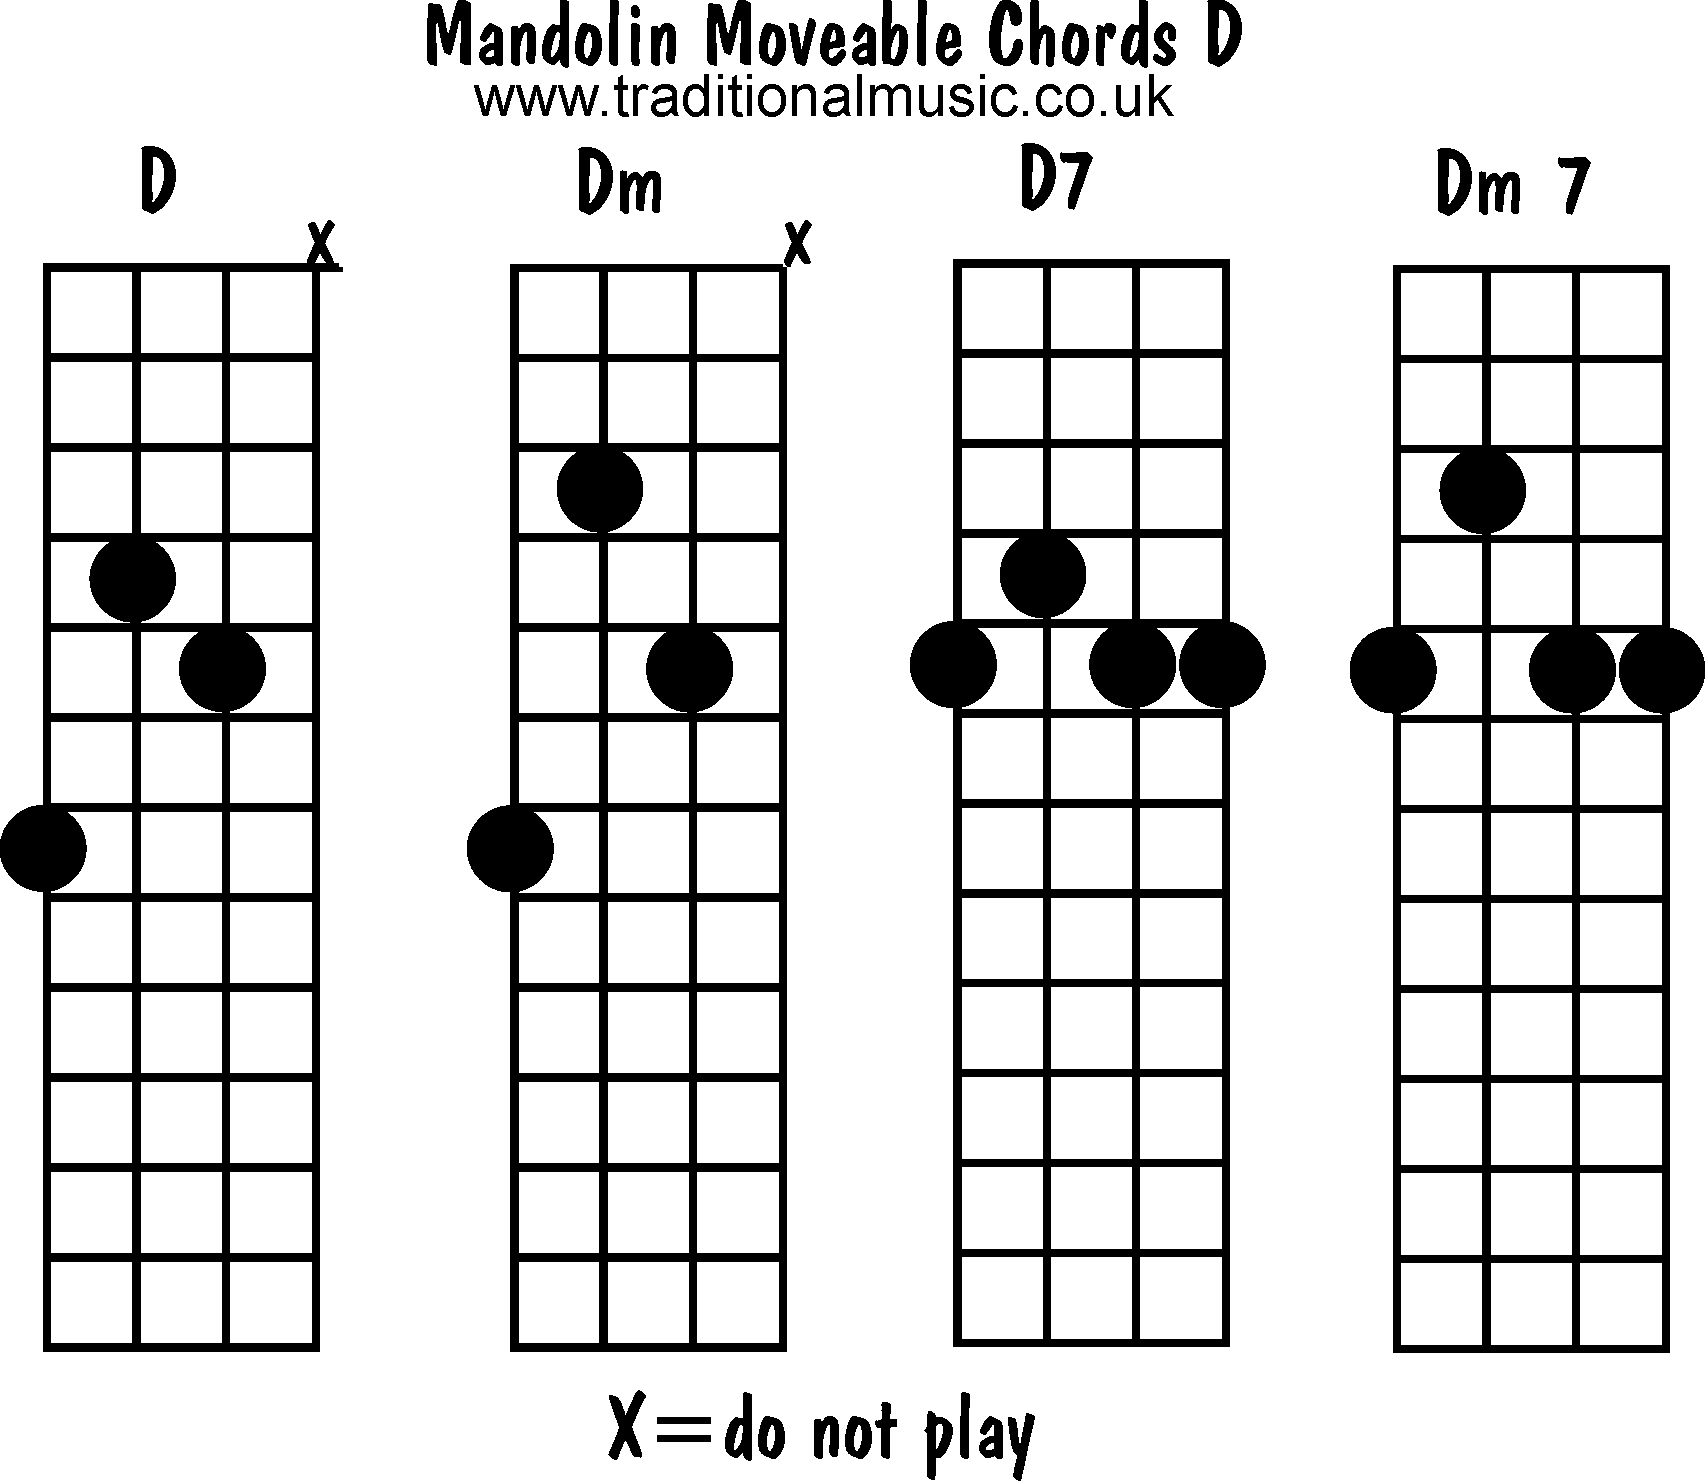 Dm7 Guitar Chord Mandolin Chords Moveable D Dm D7 Dm7